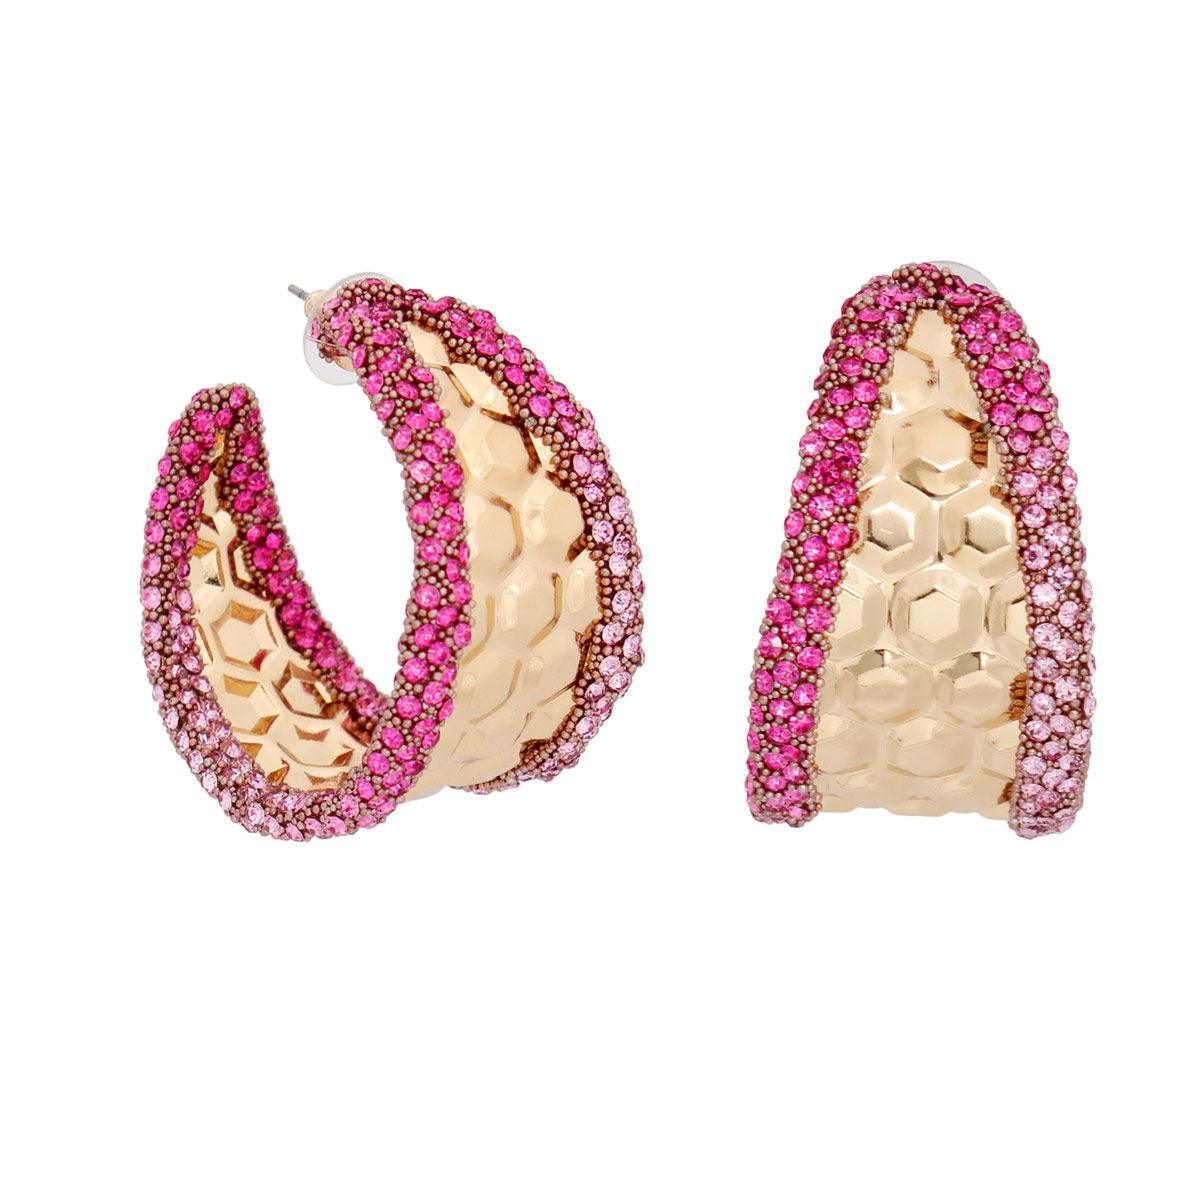 Chic Hoop Earrings Gold Textured Fuchsia Rhinestone Detail